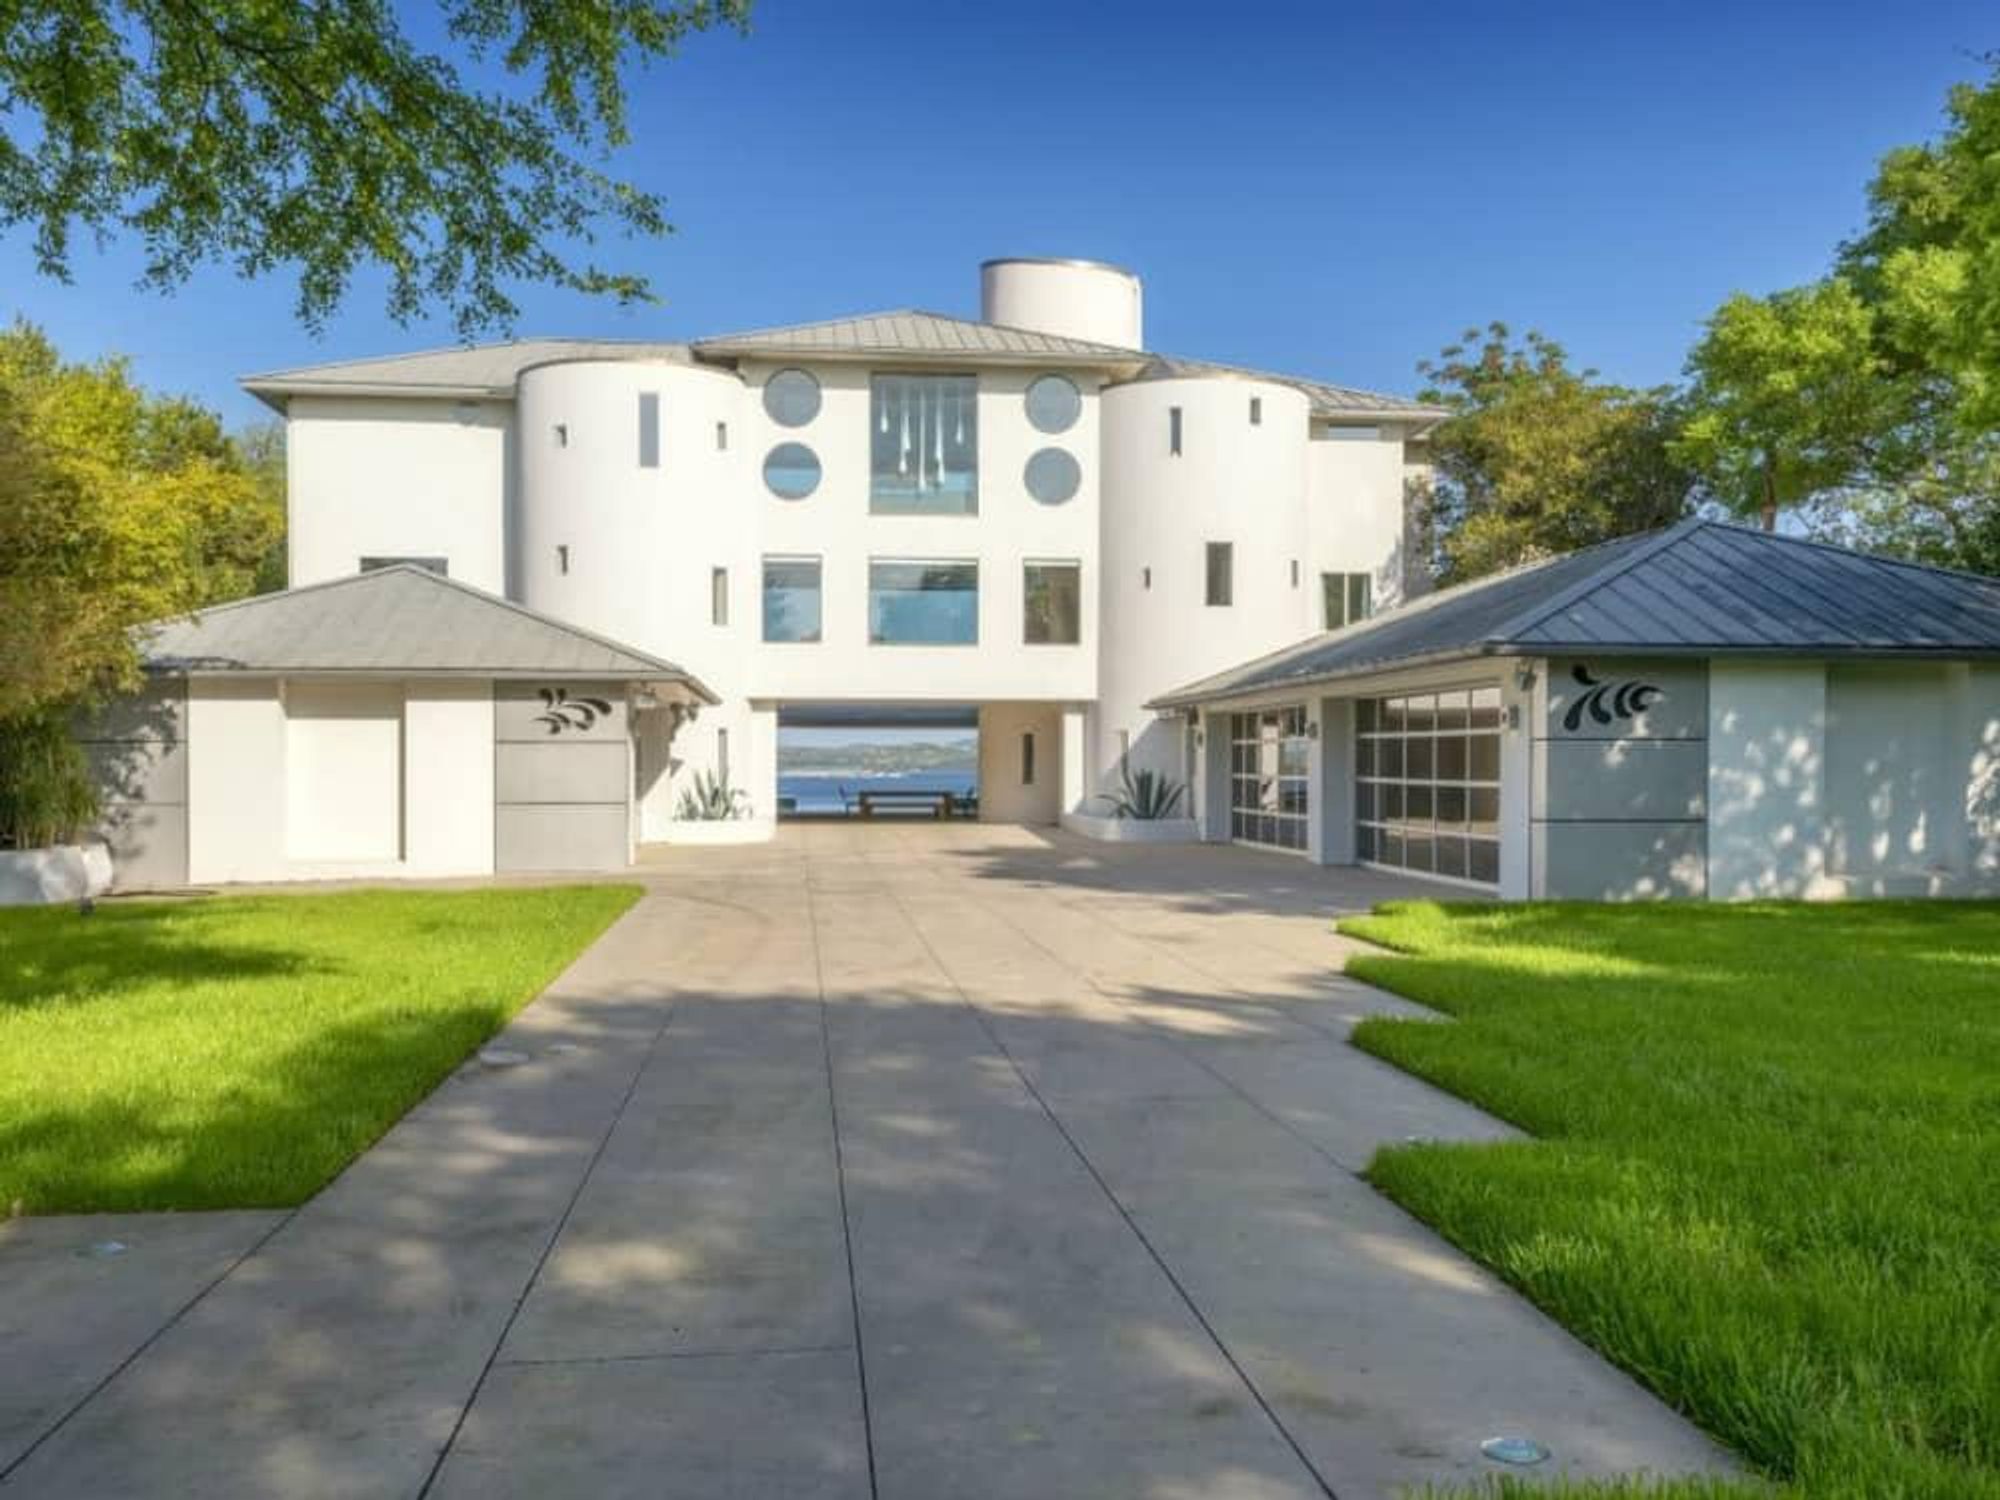 Austin house home Acqua Villa Winn Wittman Lake Travis 14515 Ridgetop Terrace 78732 exterior front